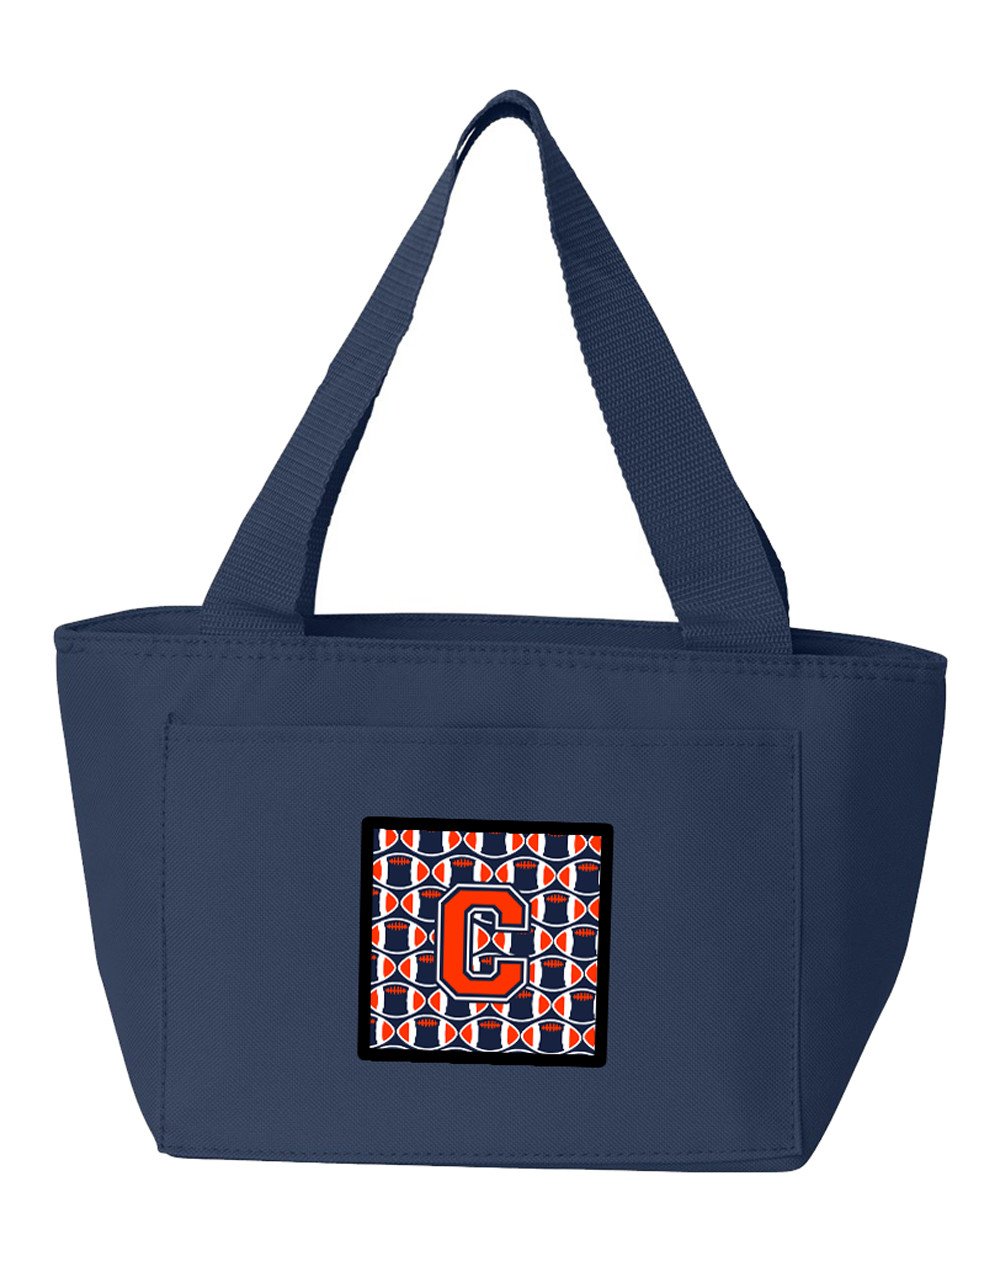 Letter C Football Orange, Blue and white Lunch Bag CJ1066-CNA-8808 by Caroline's Treasures